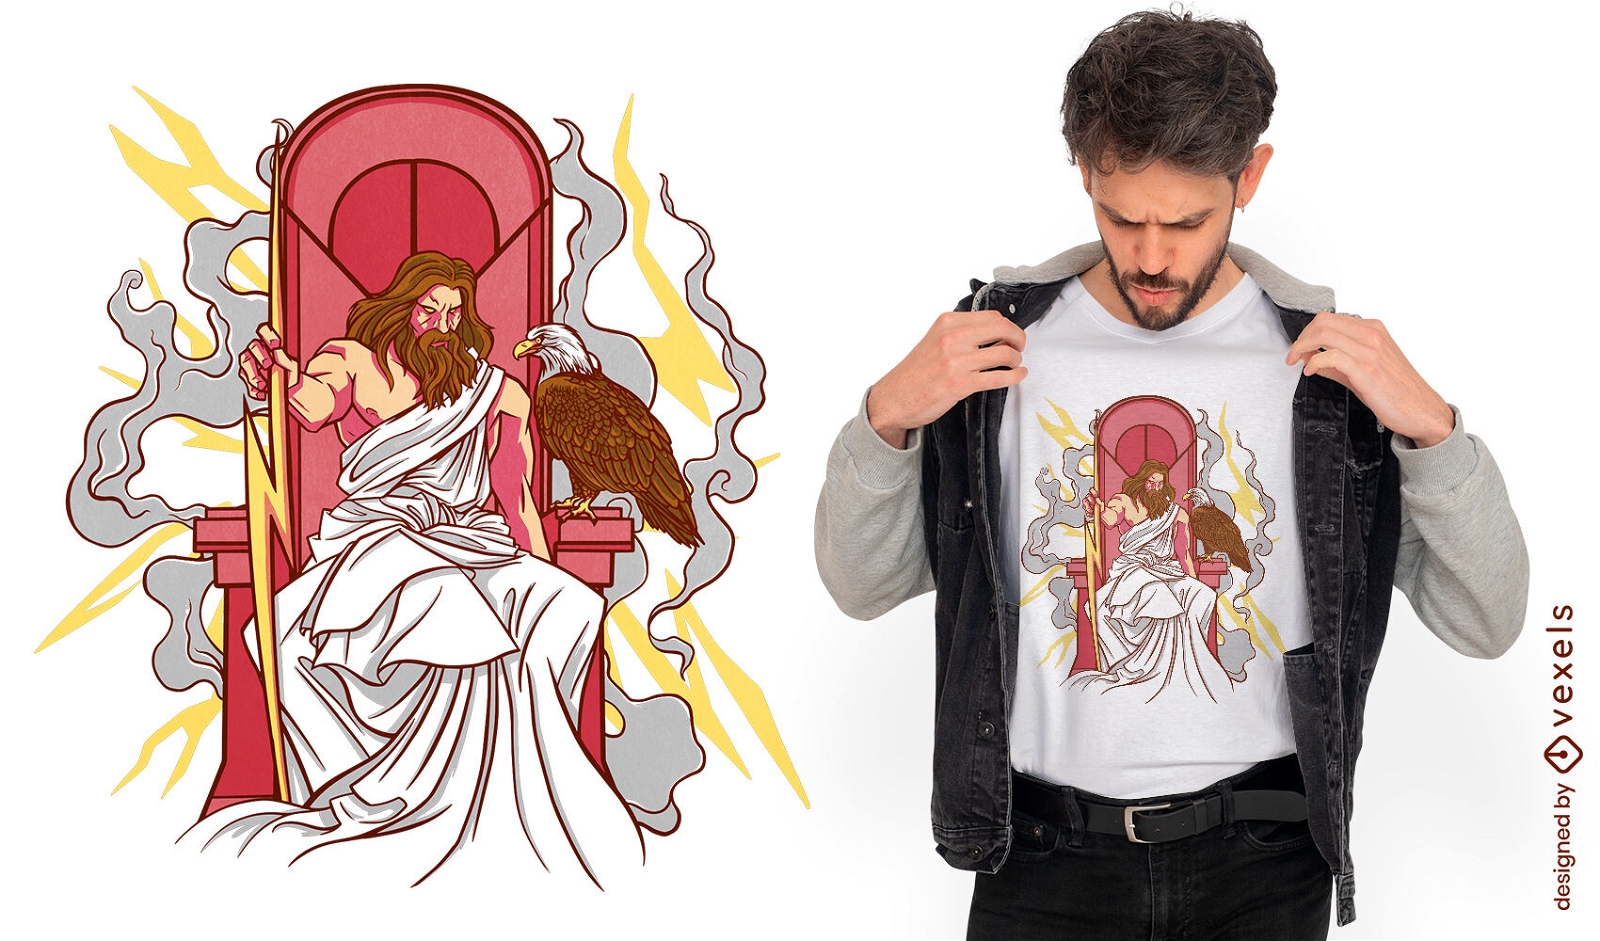 Zeus Gott griechischen Mythologie T-Shirt-Design